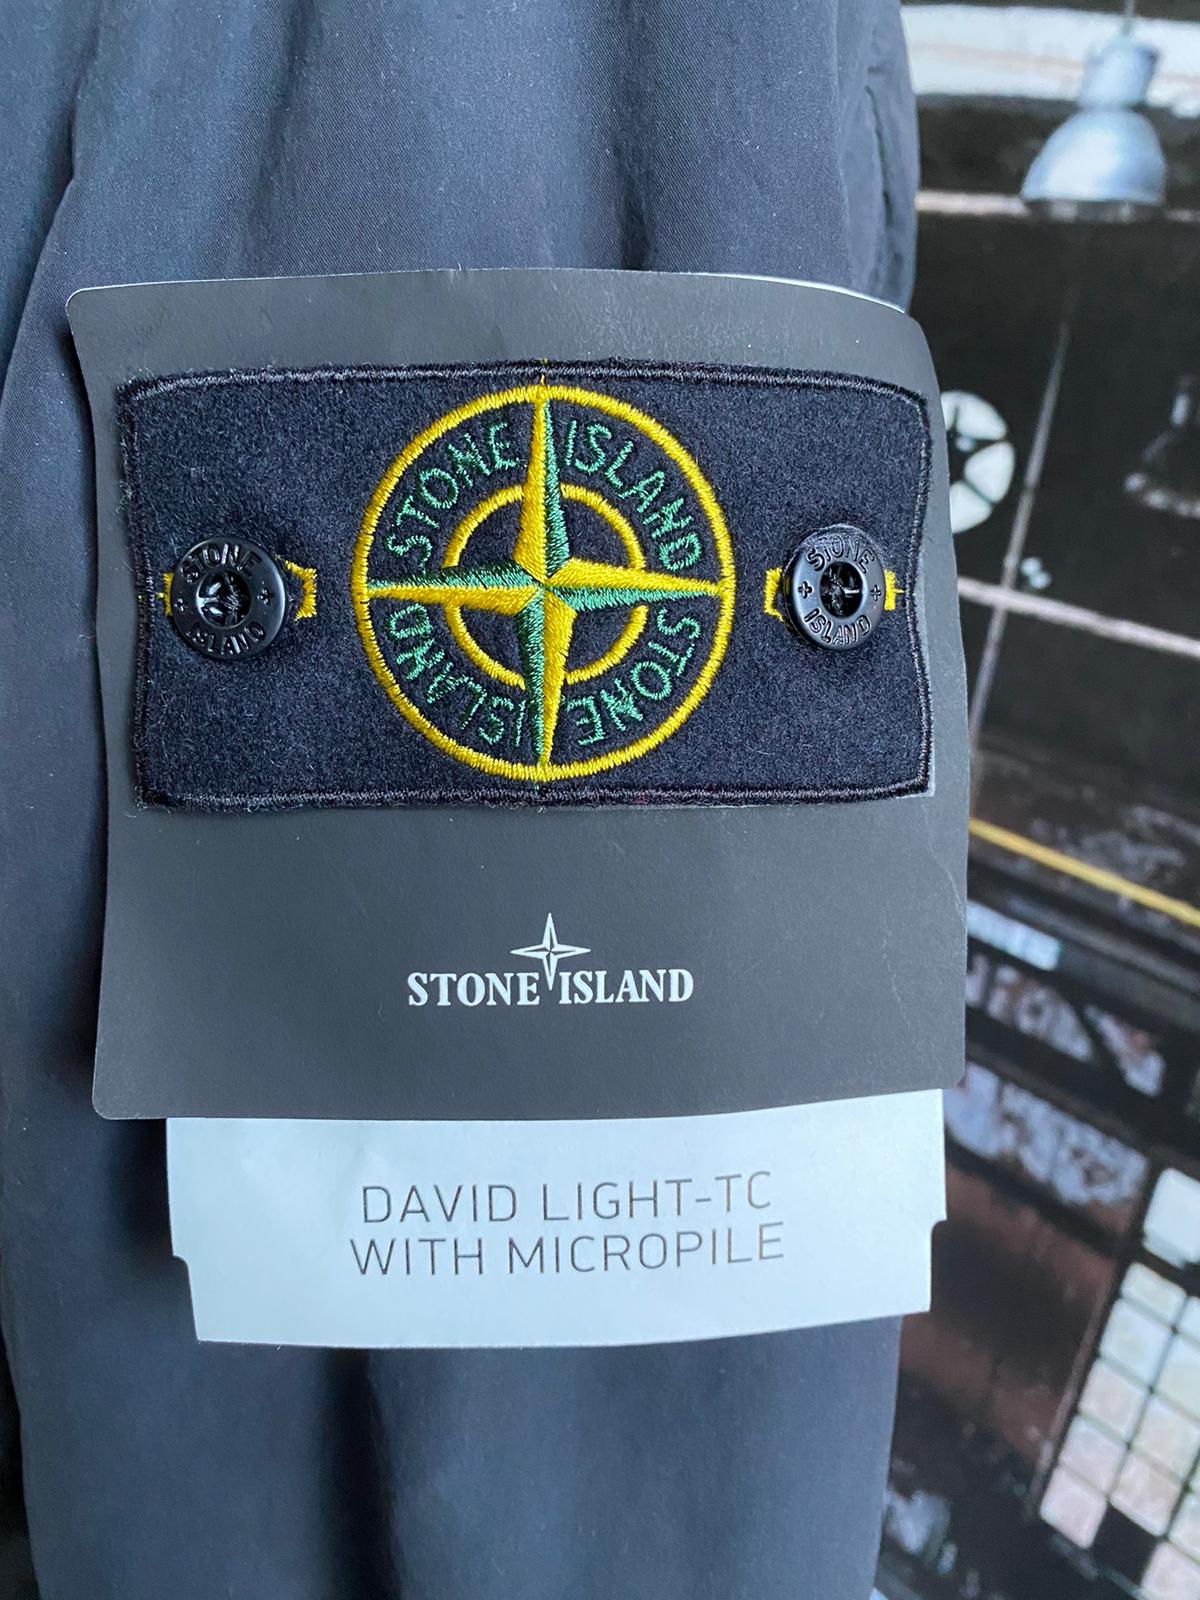 STONE ISLAND DAVID LIGHT-TC WITH MICROPILE JACKET - X Clothing